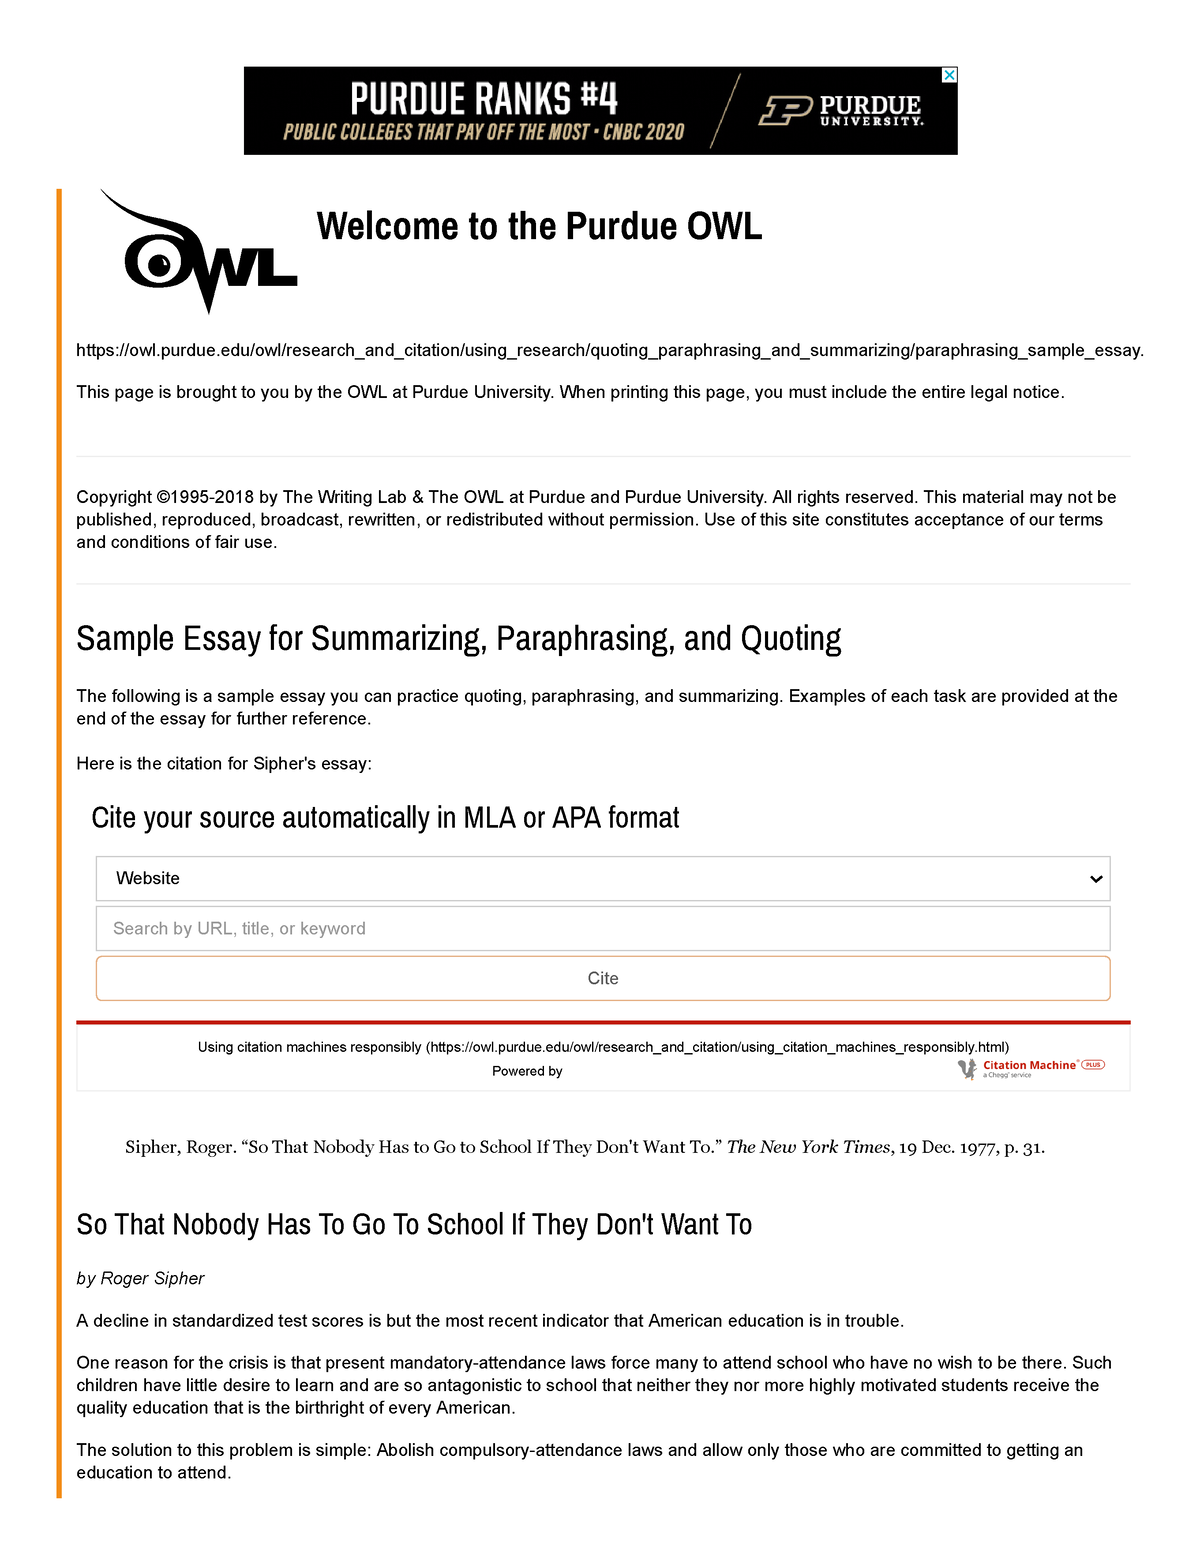 owl purdue online paraphrasing